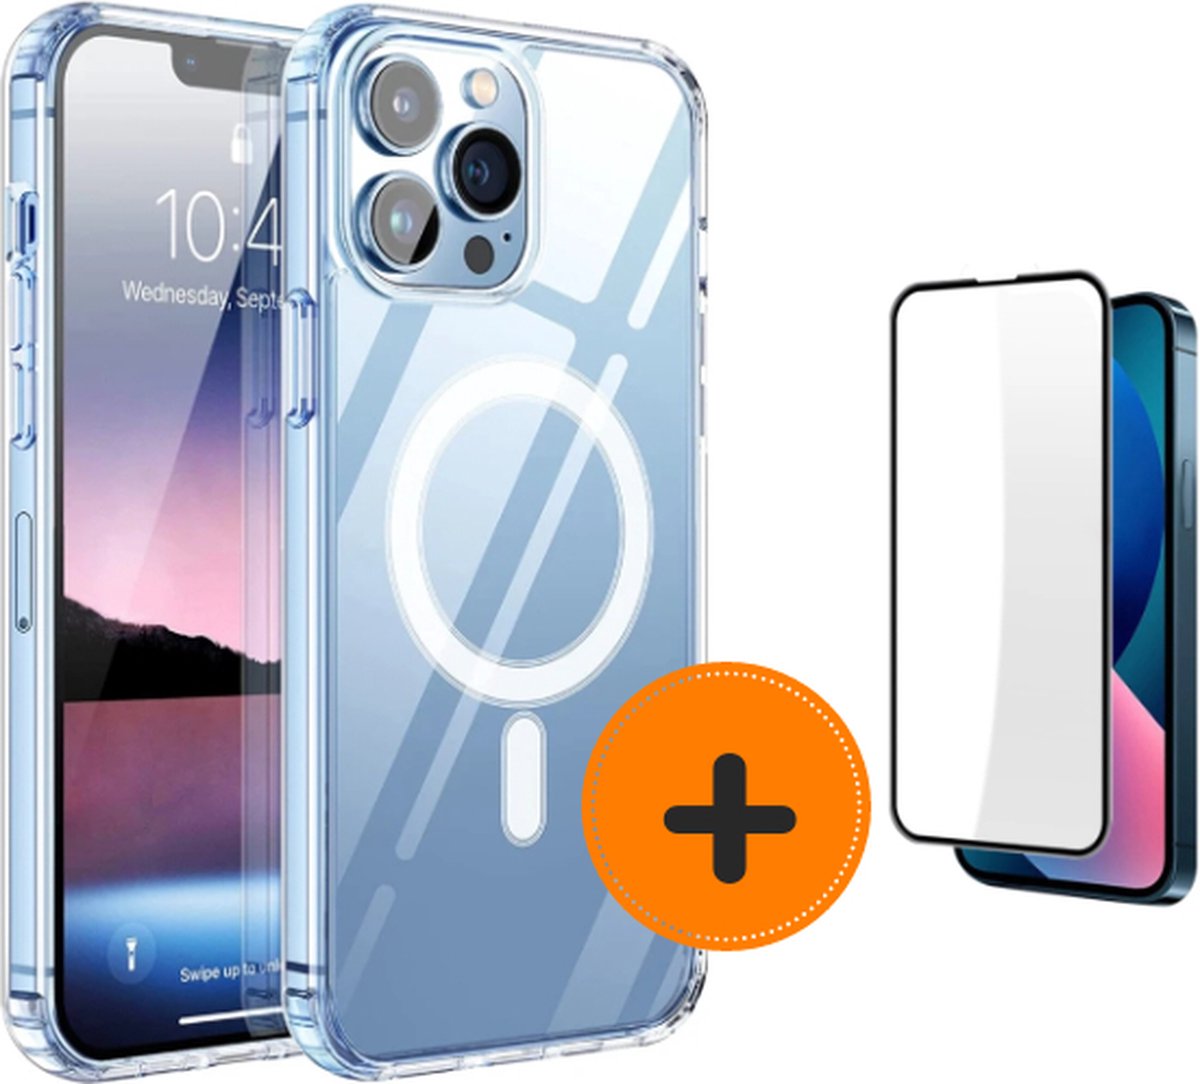 Bundel iPhone 13 MagSafe telefoonhoesje insclusief screenprotector - shoptelefoonhoesje - sterke magneet inclusief screenprotector